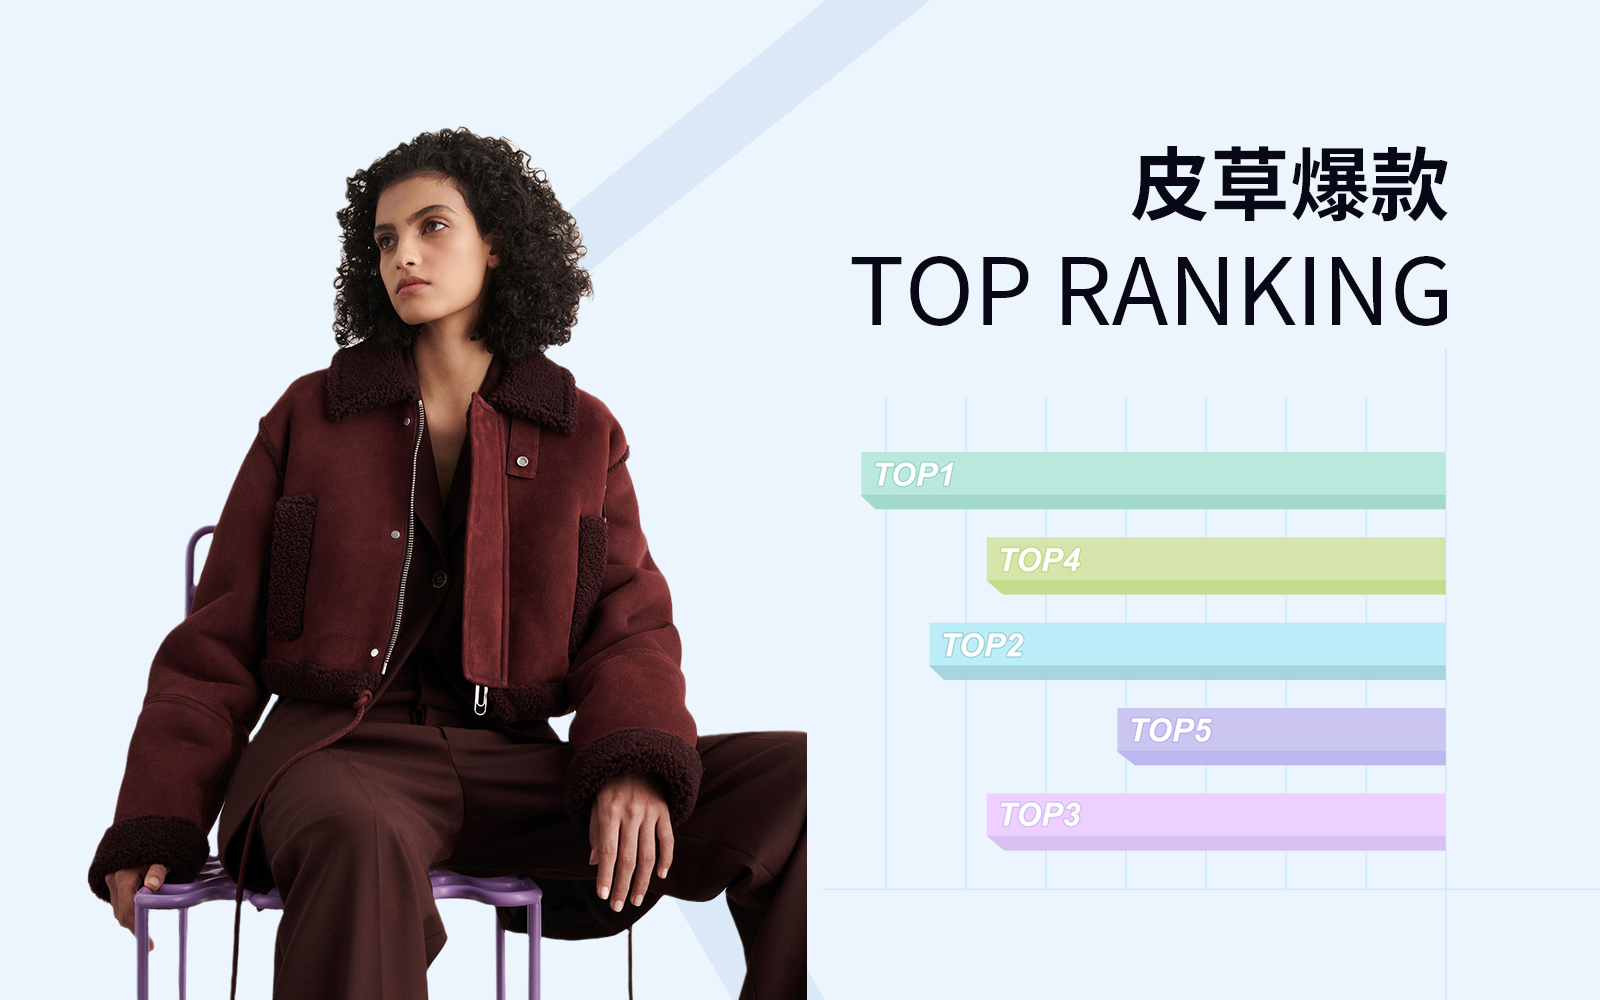 Leather & Fur -- The TOP Ranking of Womenswear